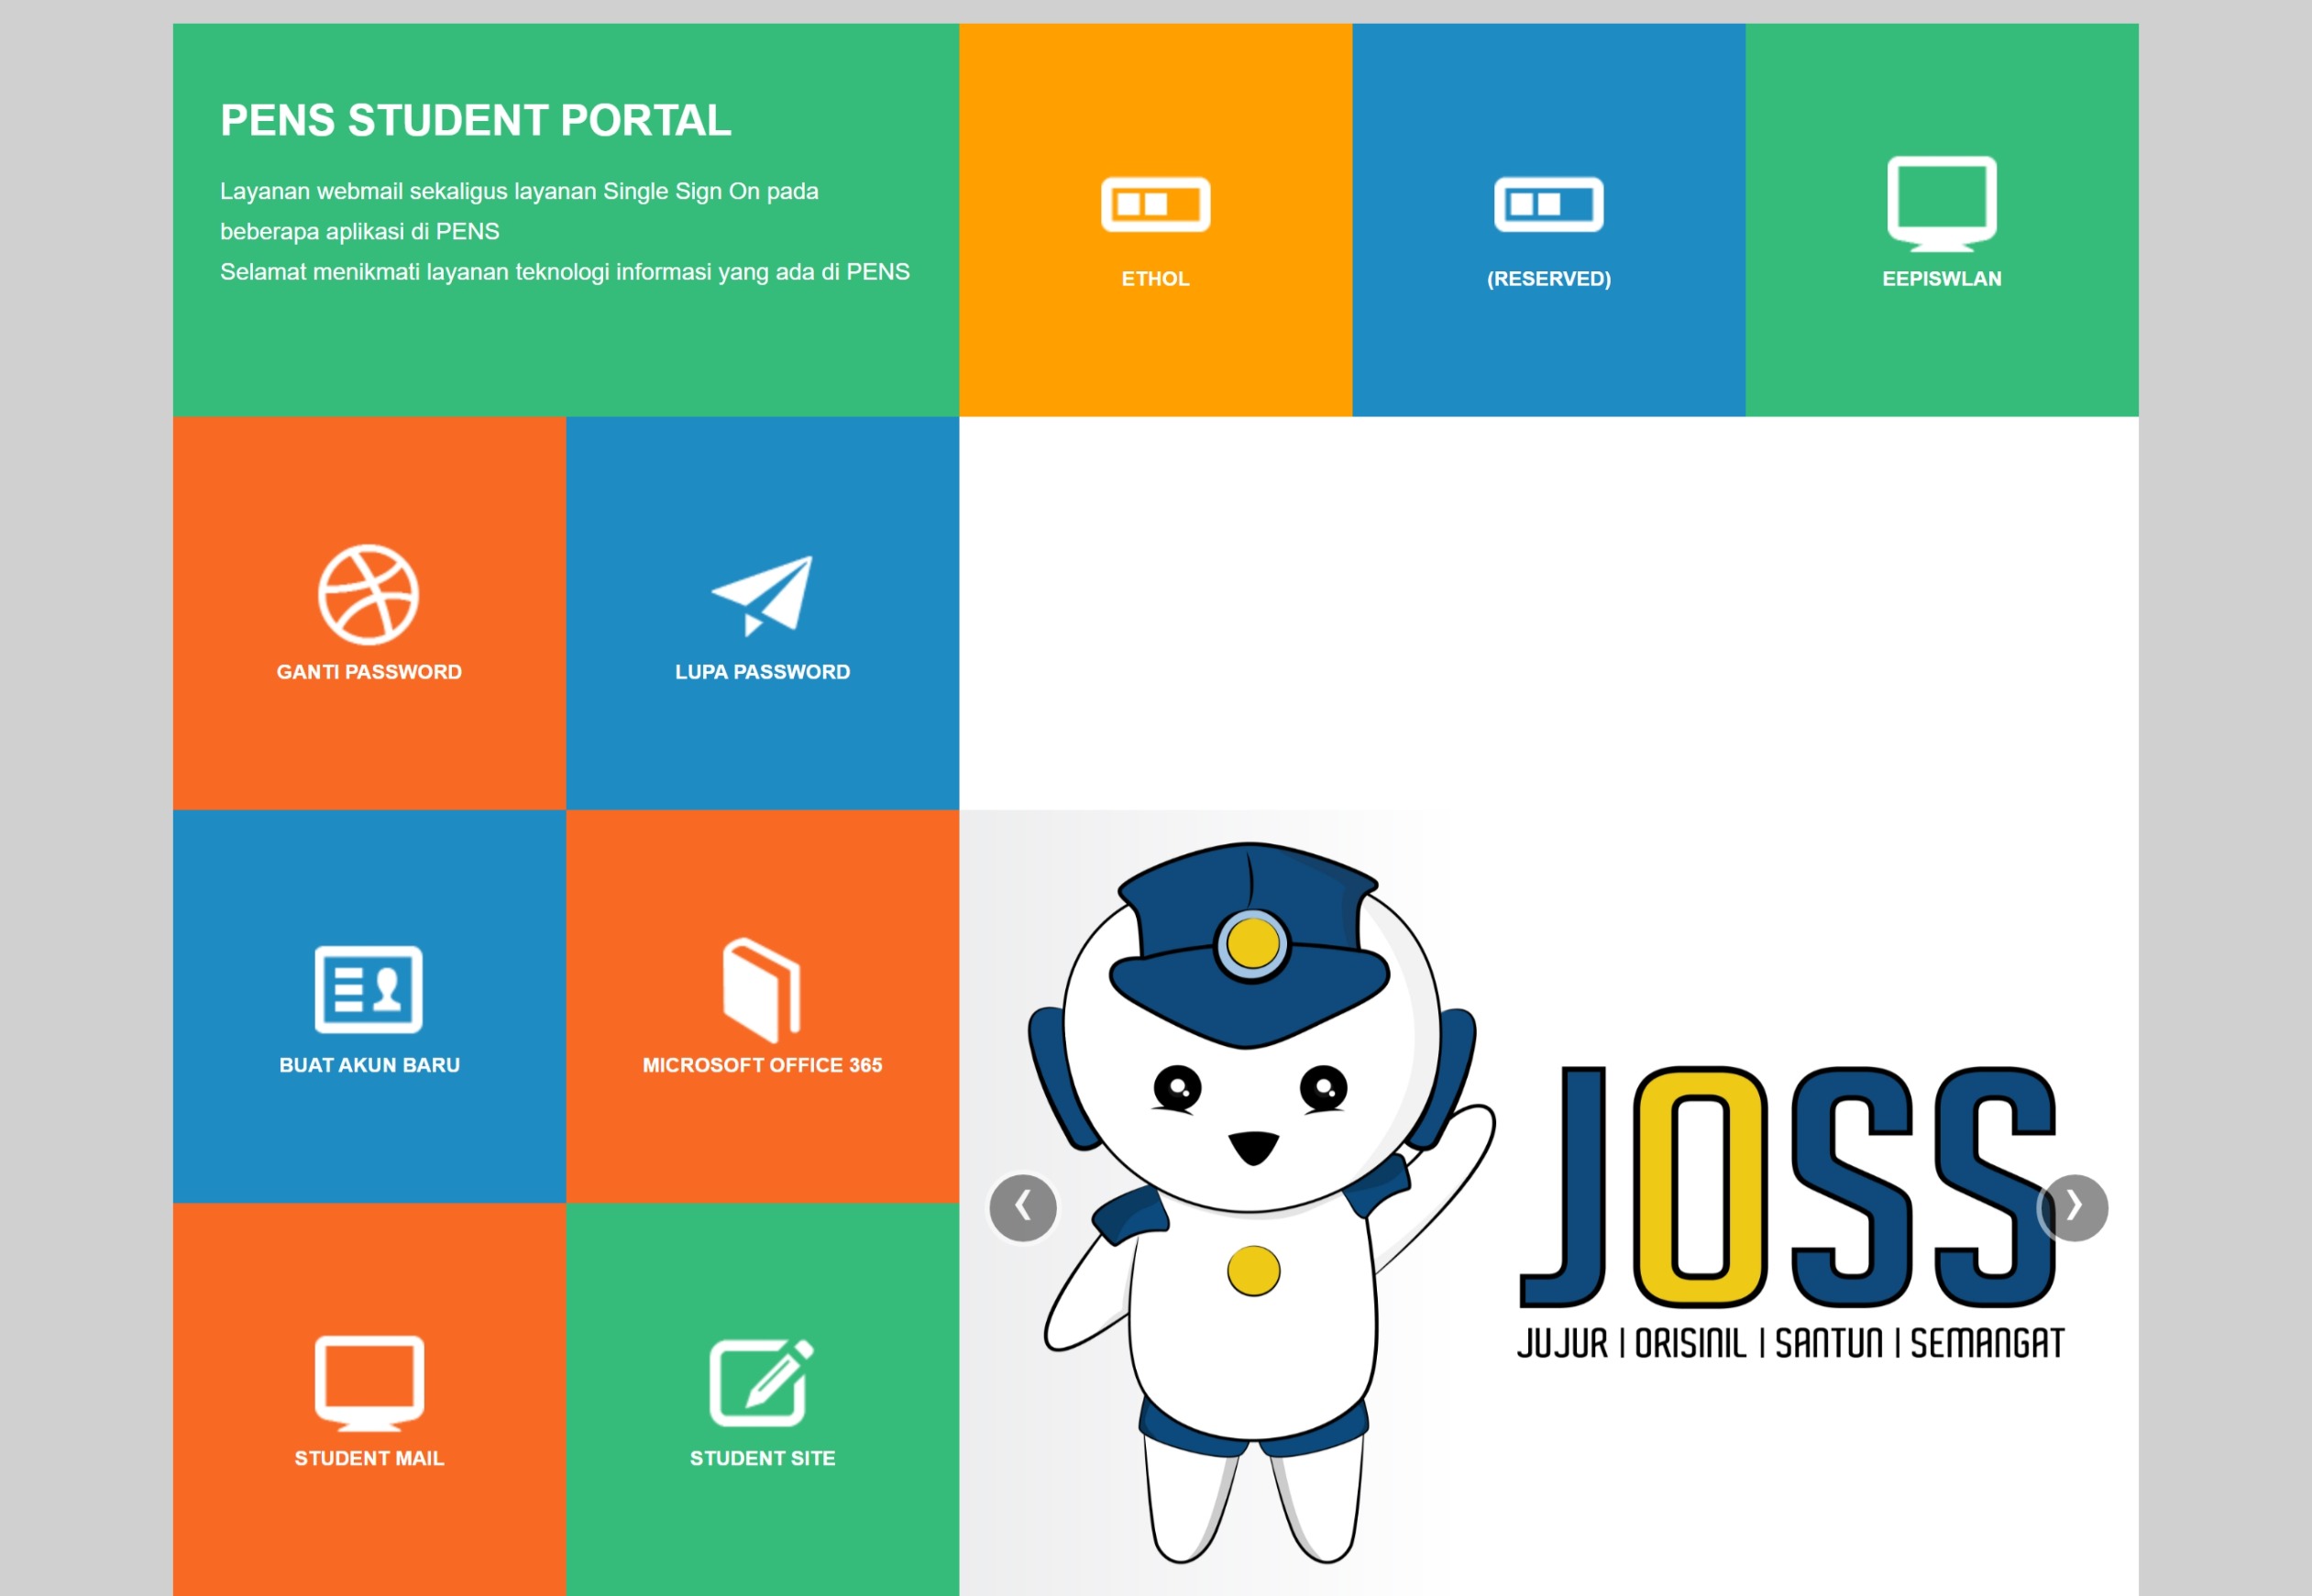 Pilihan student site pada laman student portal